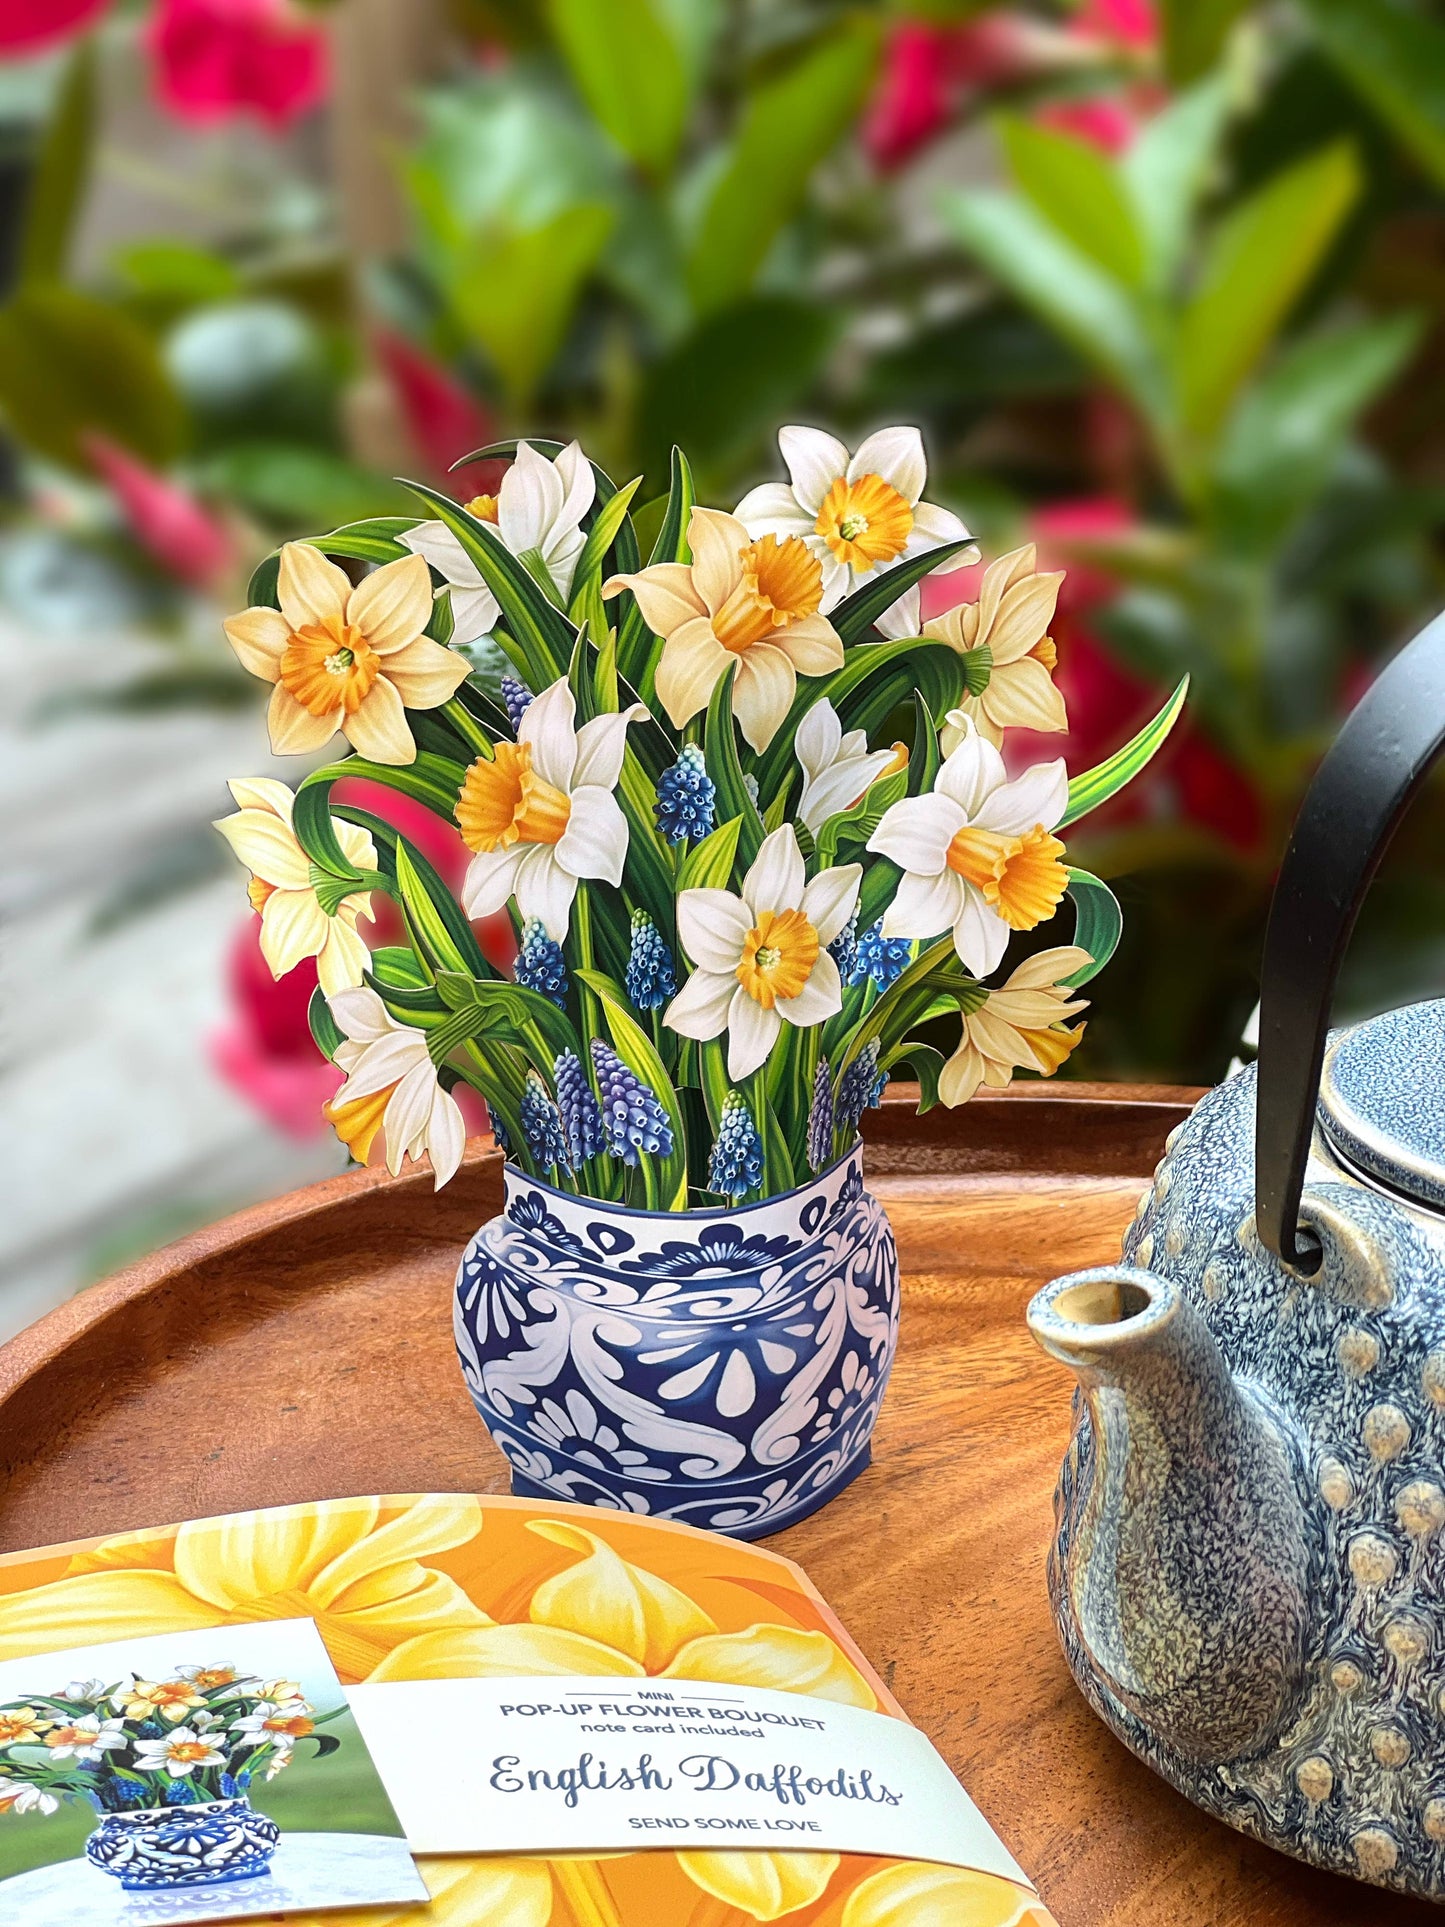 Mini English Daffodil Mini Pop-up Greeting Card